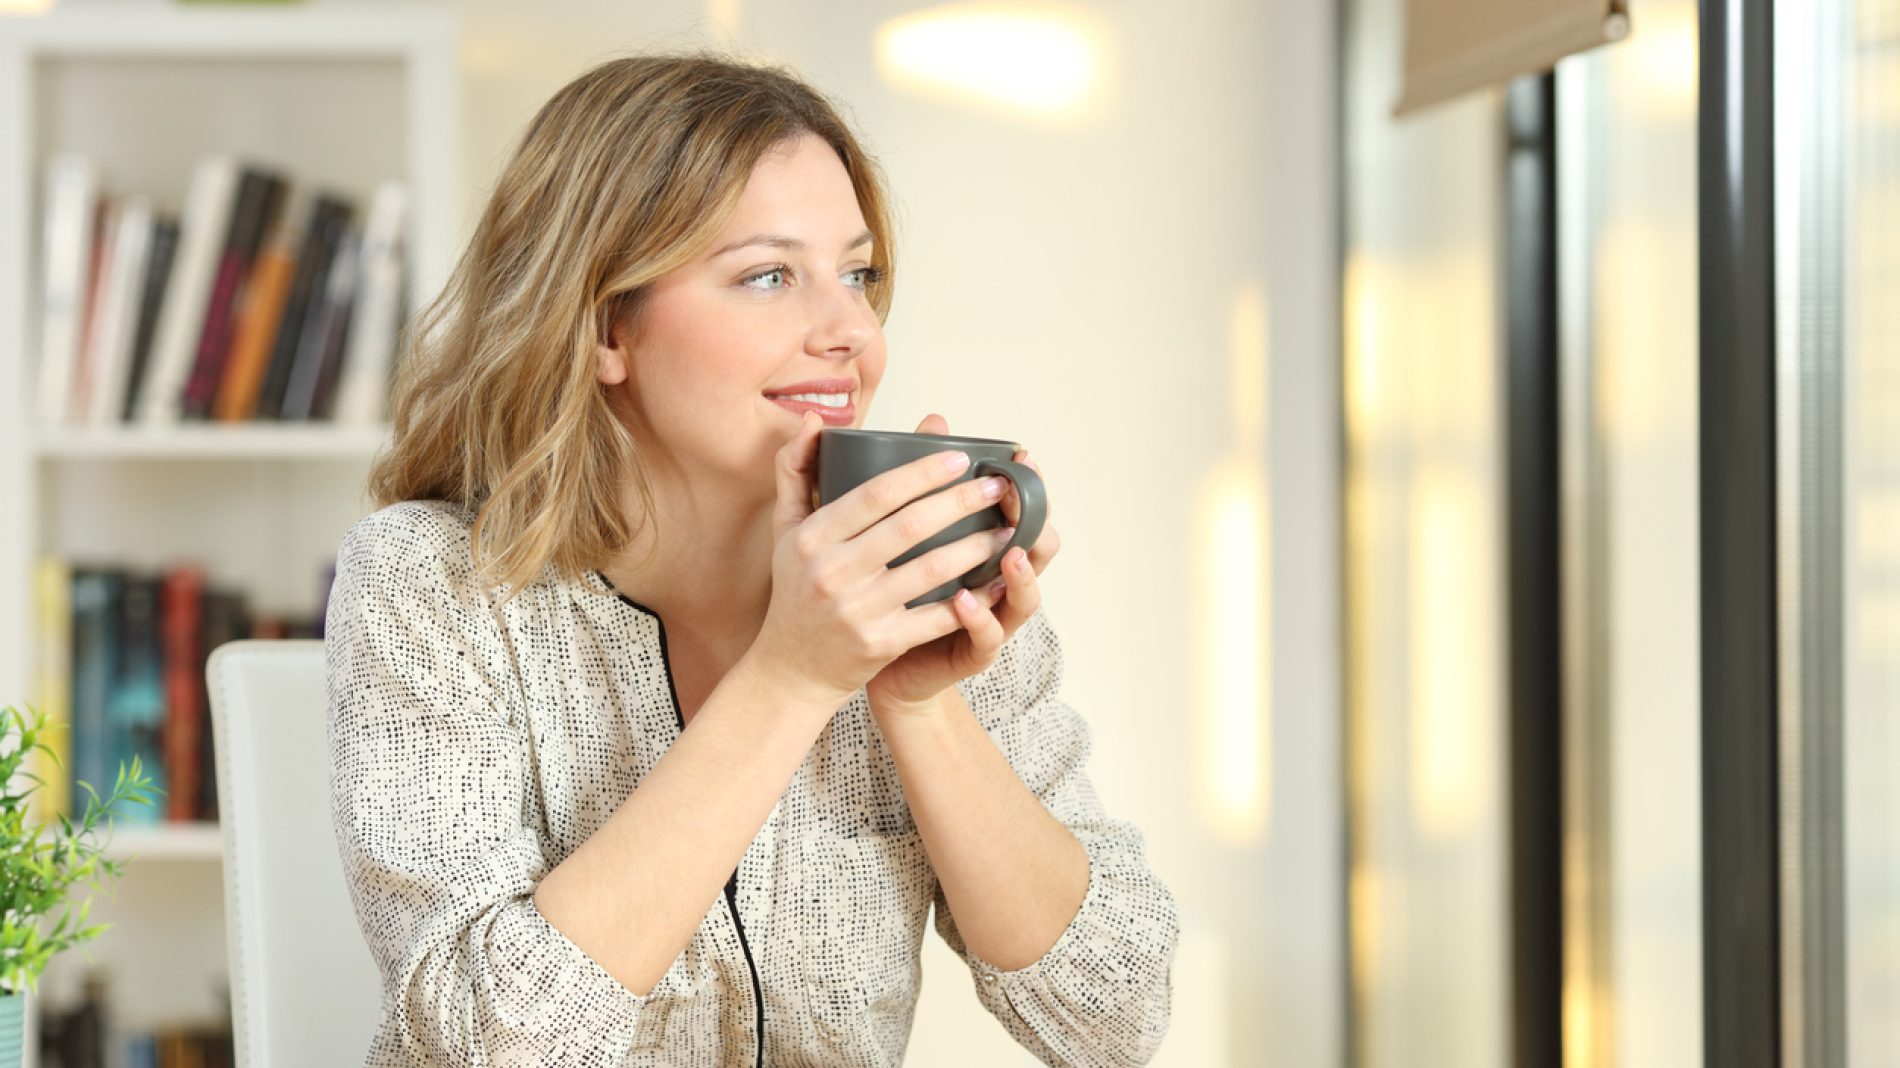 Woman looking through a window drinking coffee